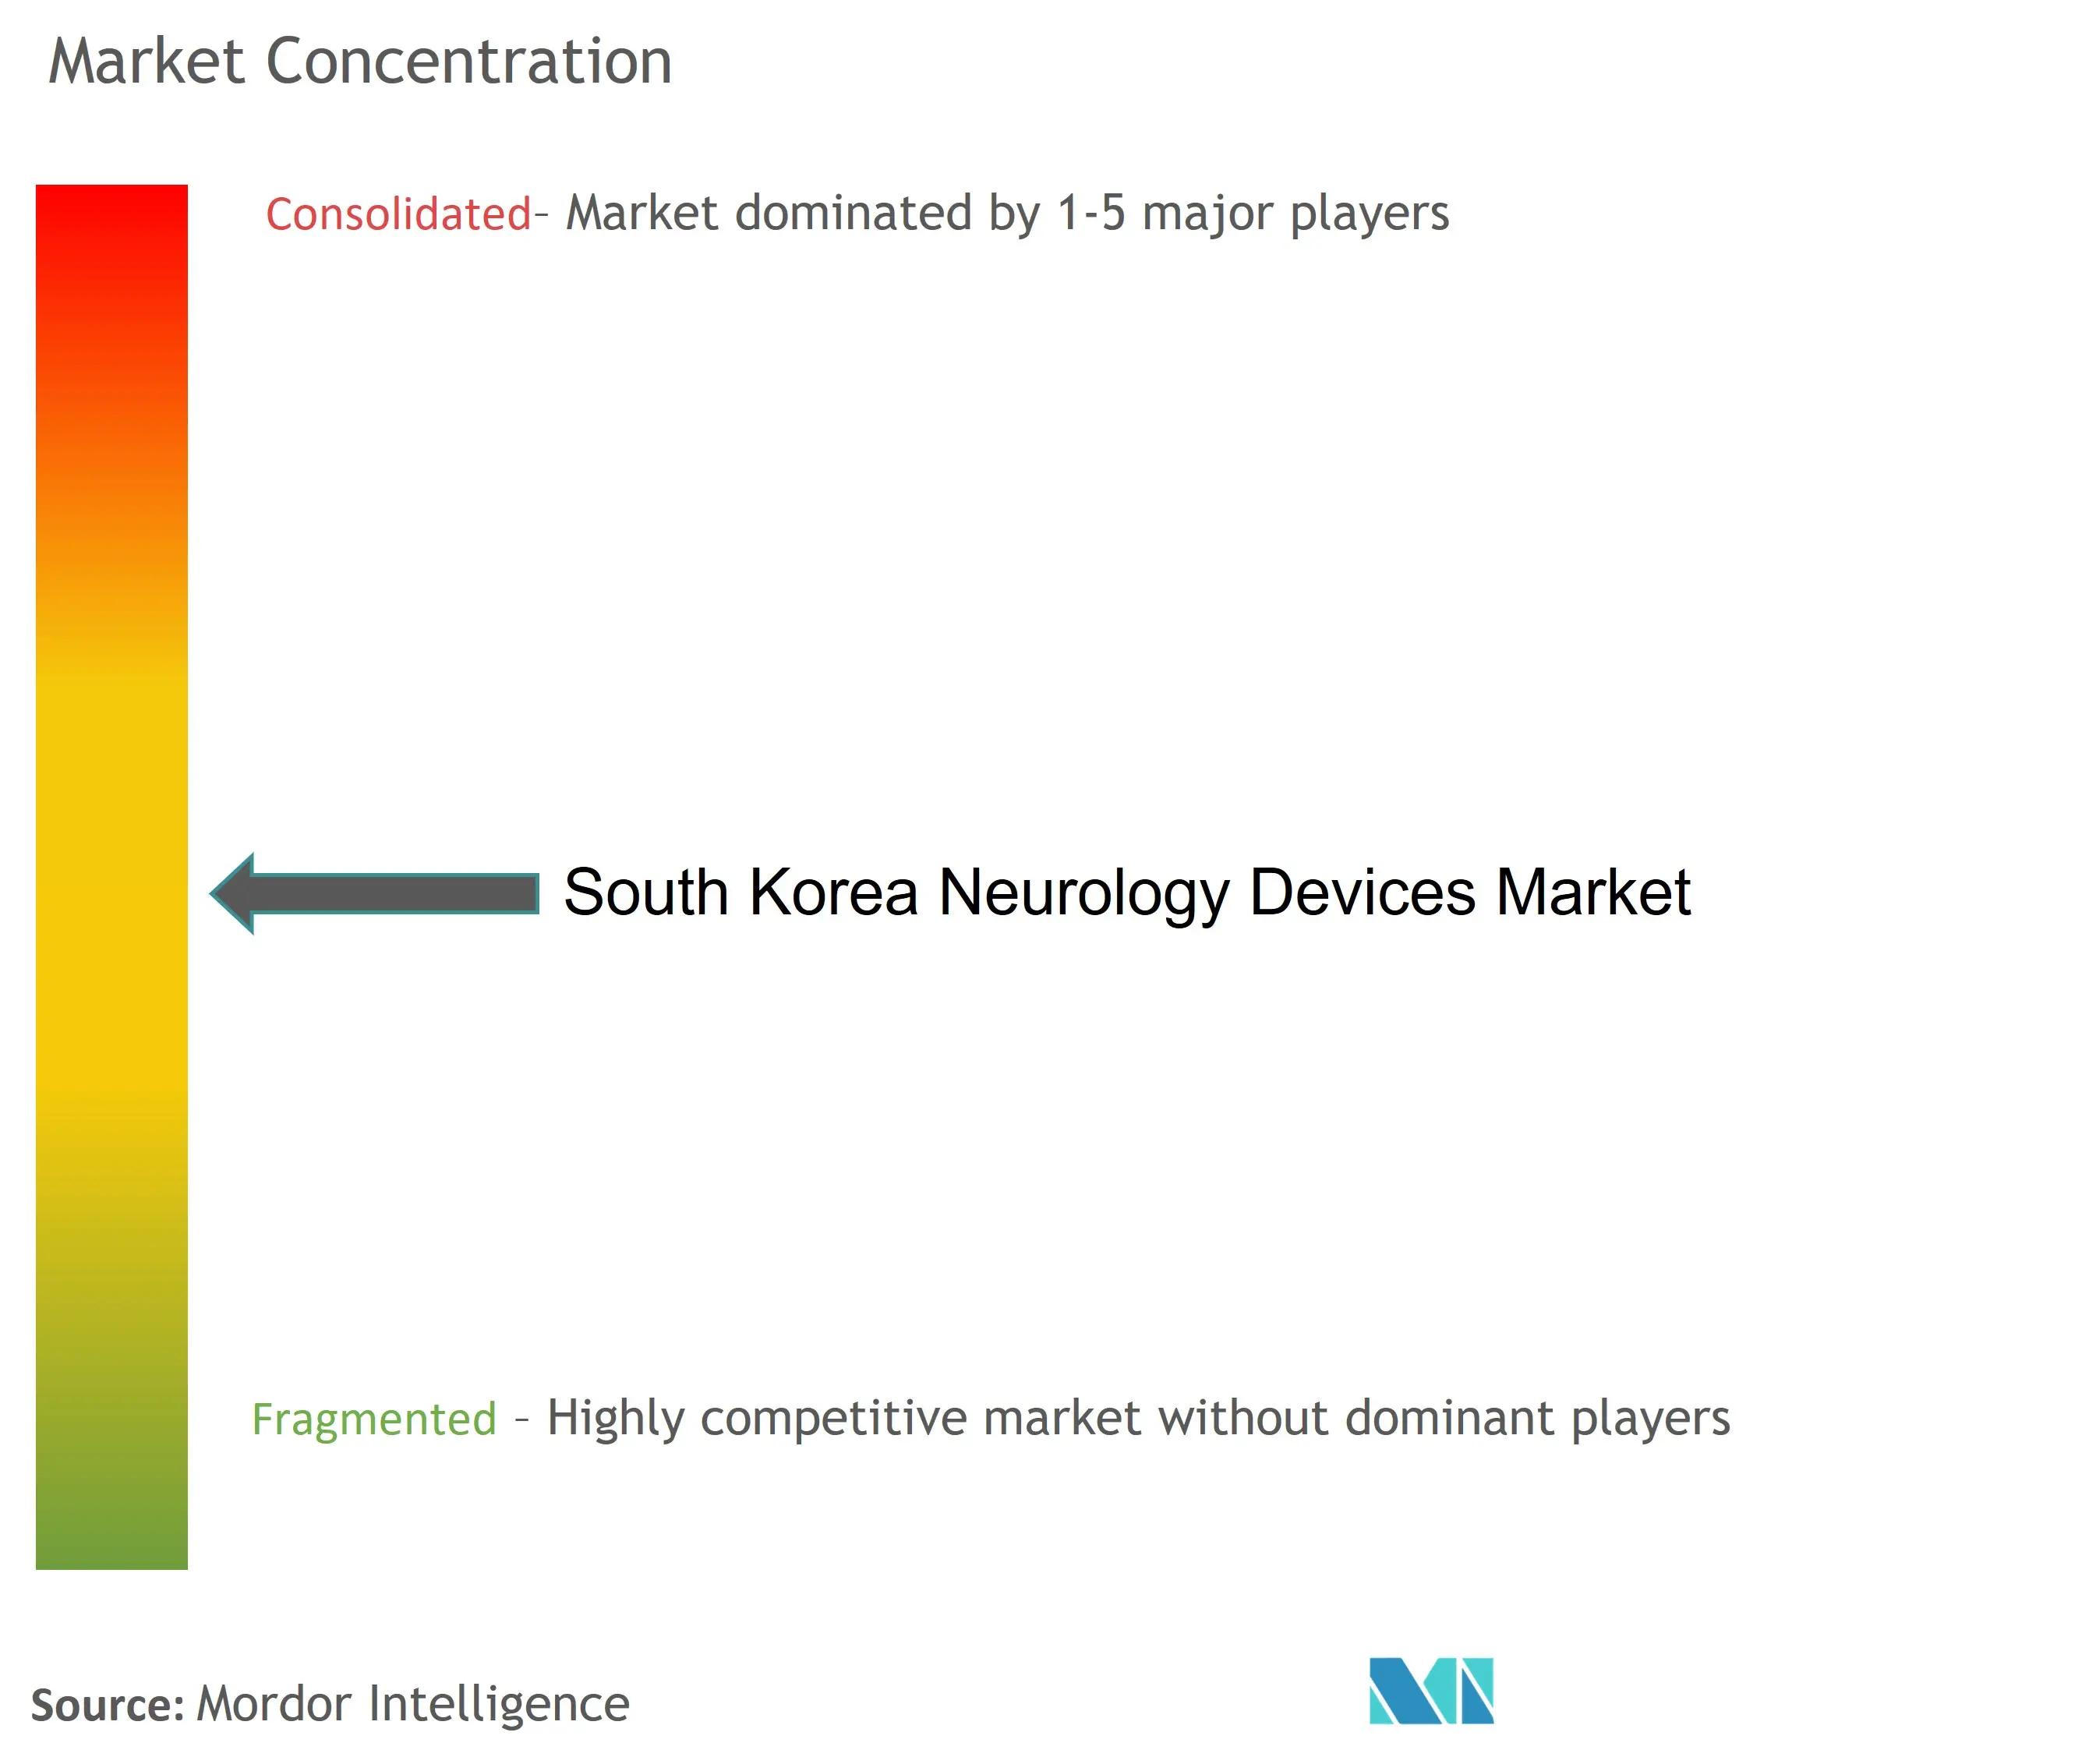 韓国神経機器市場の集中度